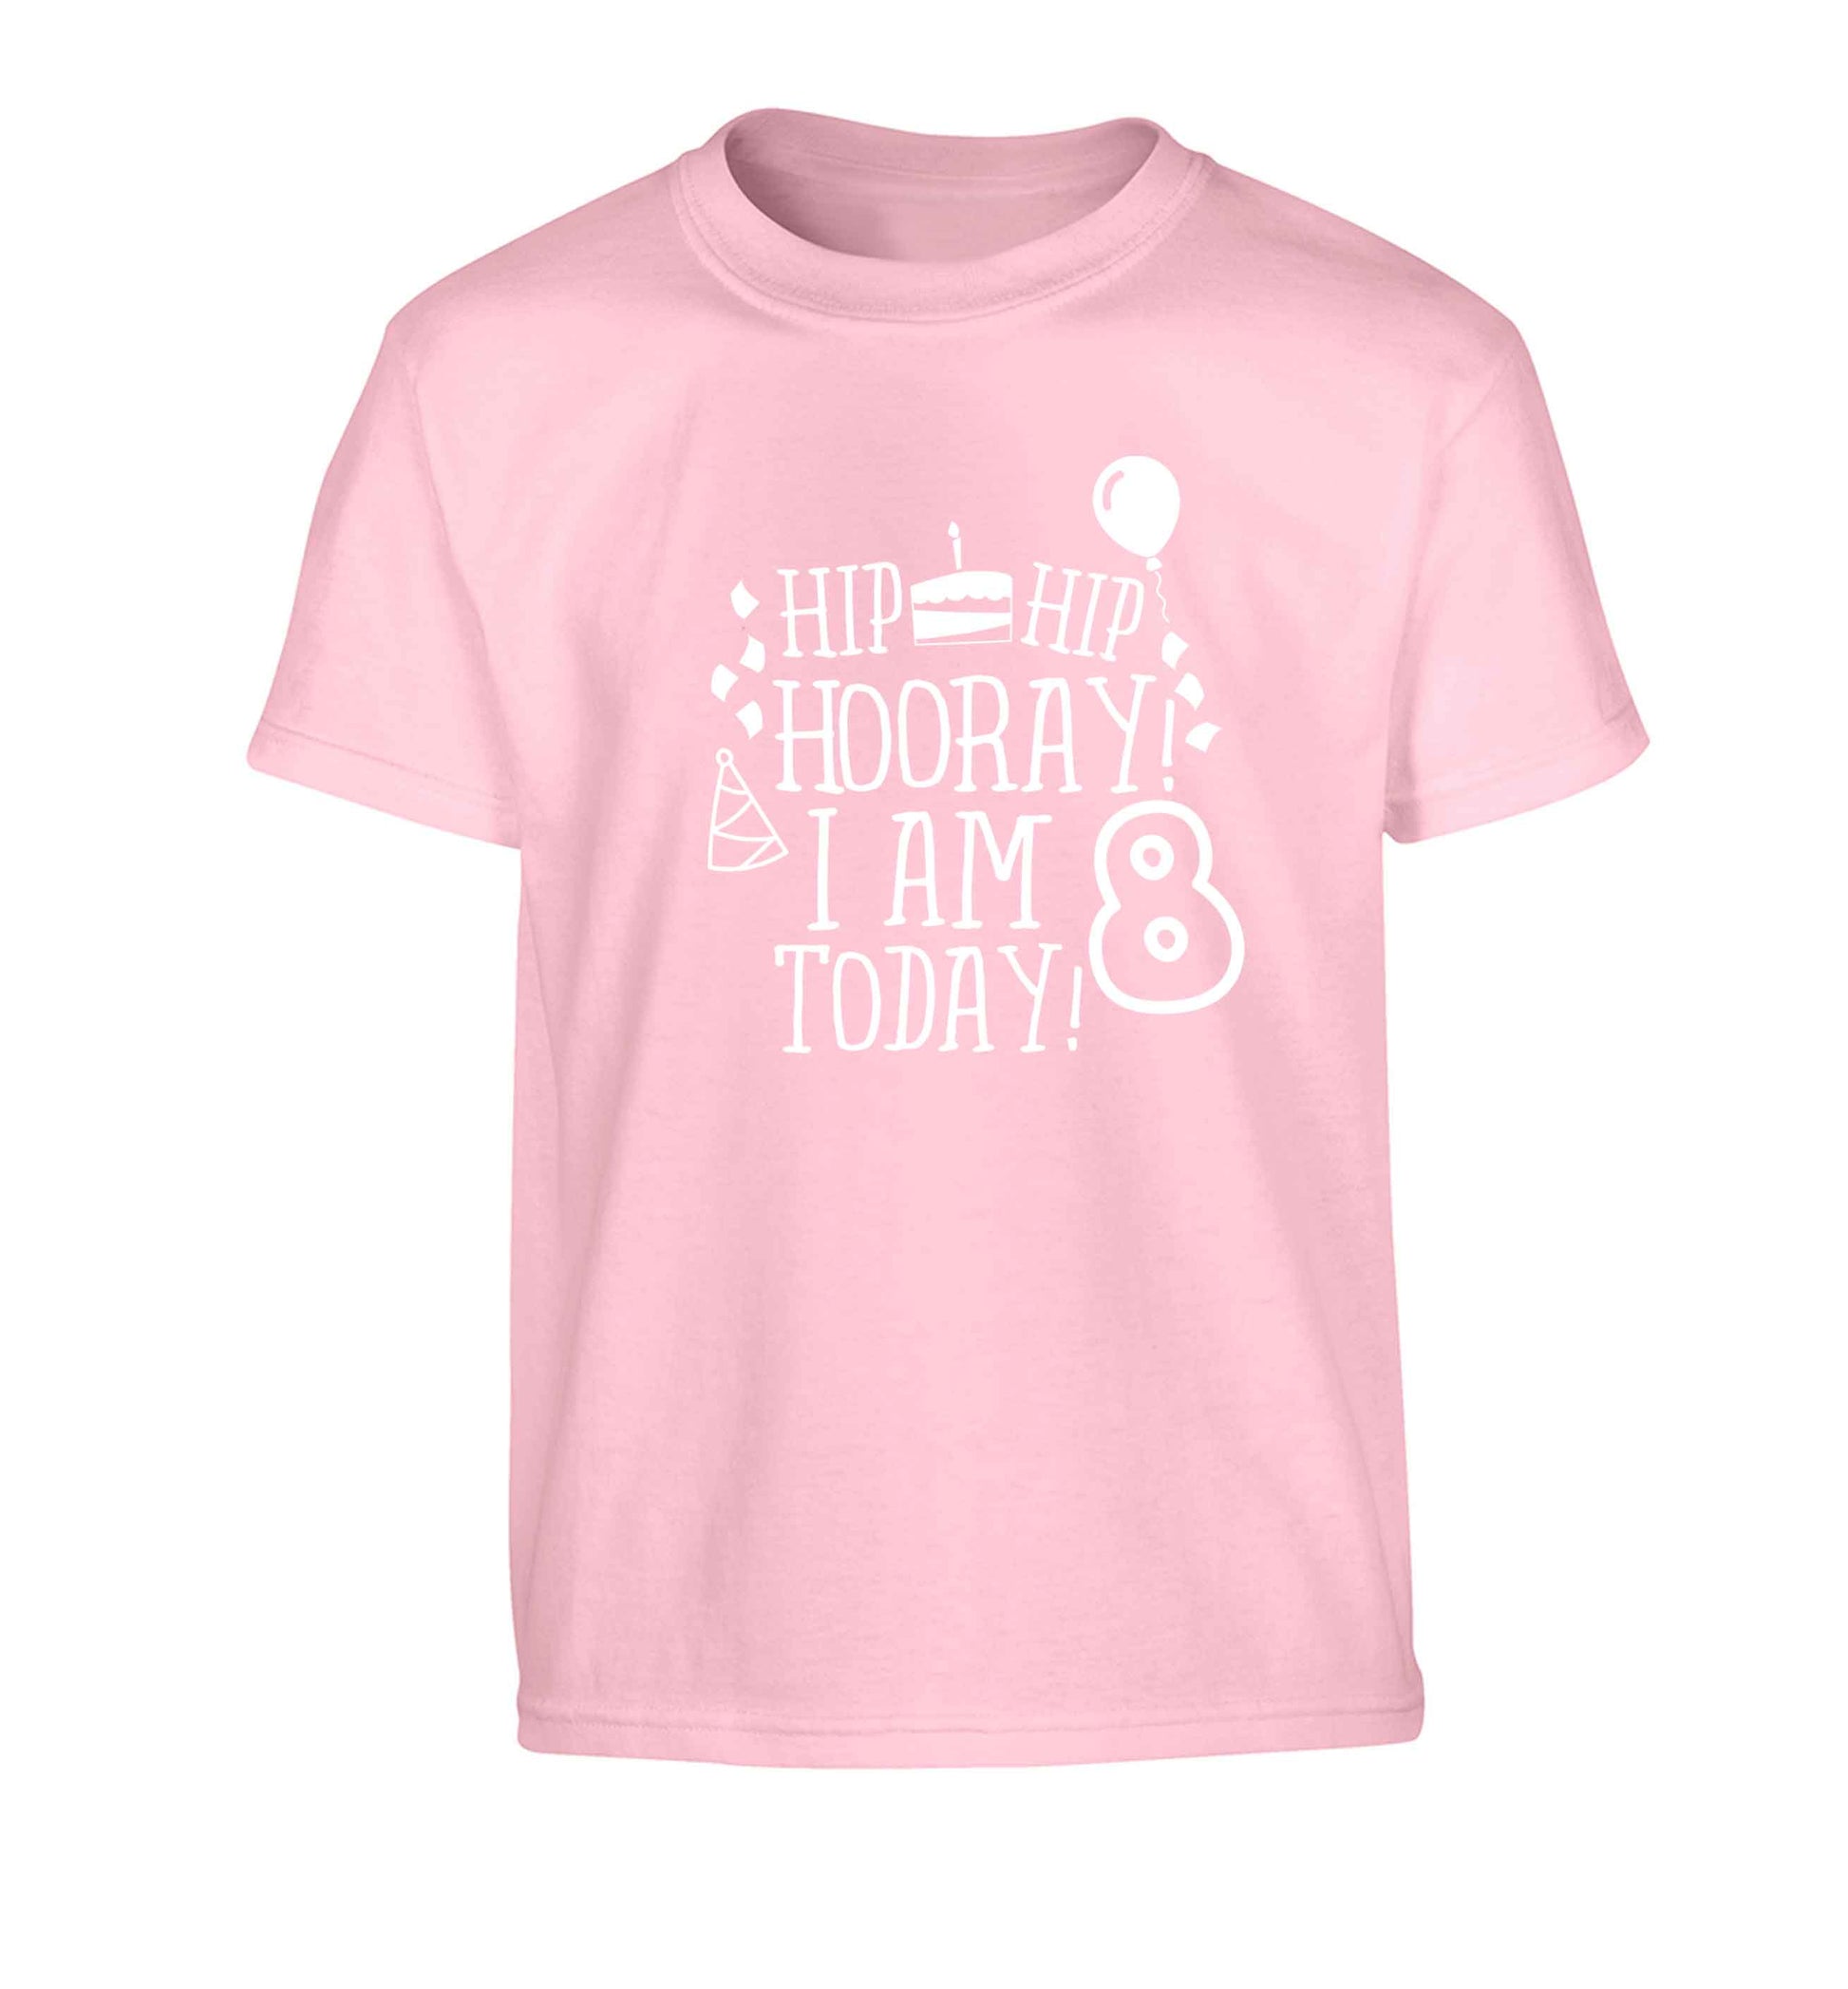 Hip hip hooray I am 8 today! Children's light pink Tshirt 12-13 Years